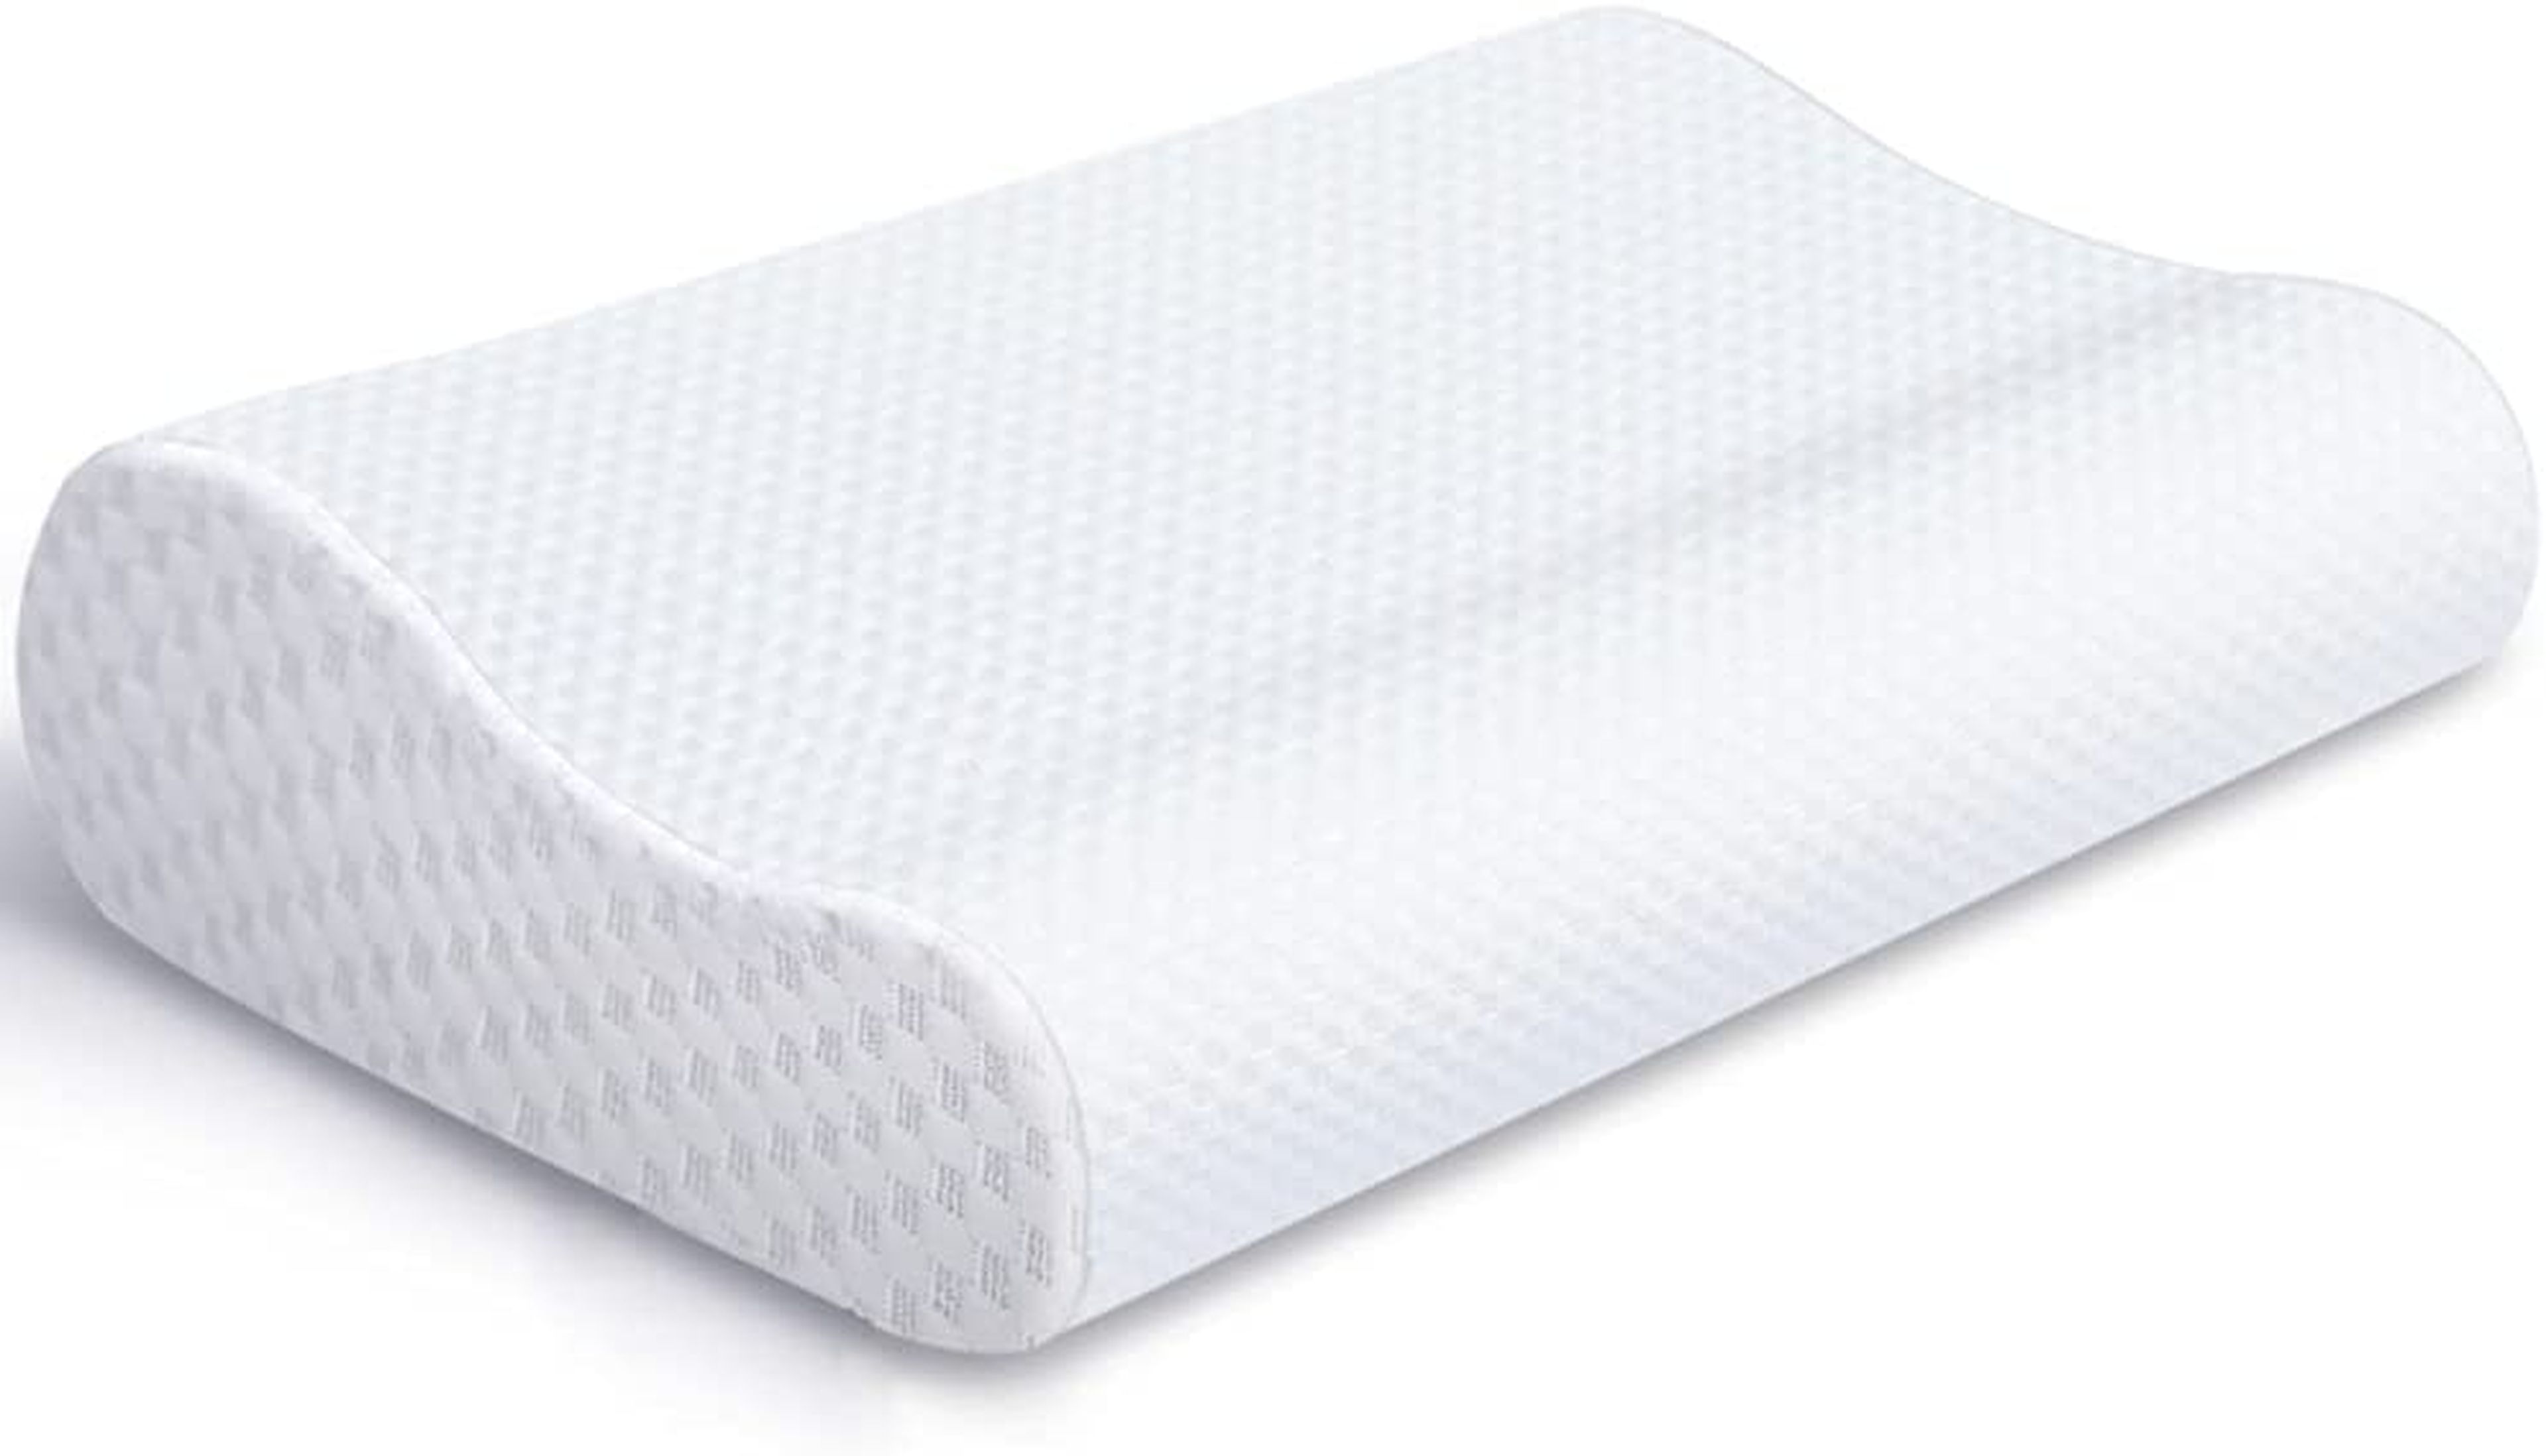 Mejores almohadas cervicales de viaje por menos de 30 euros